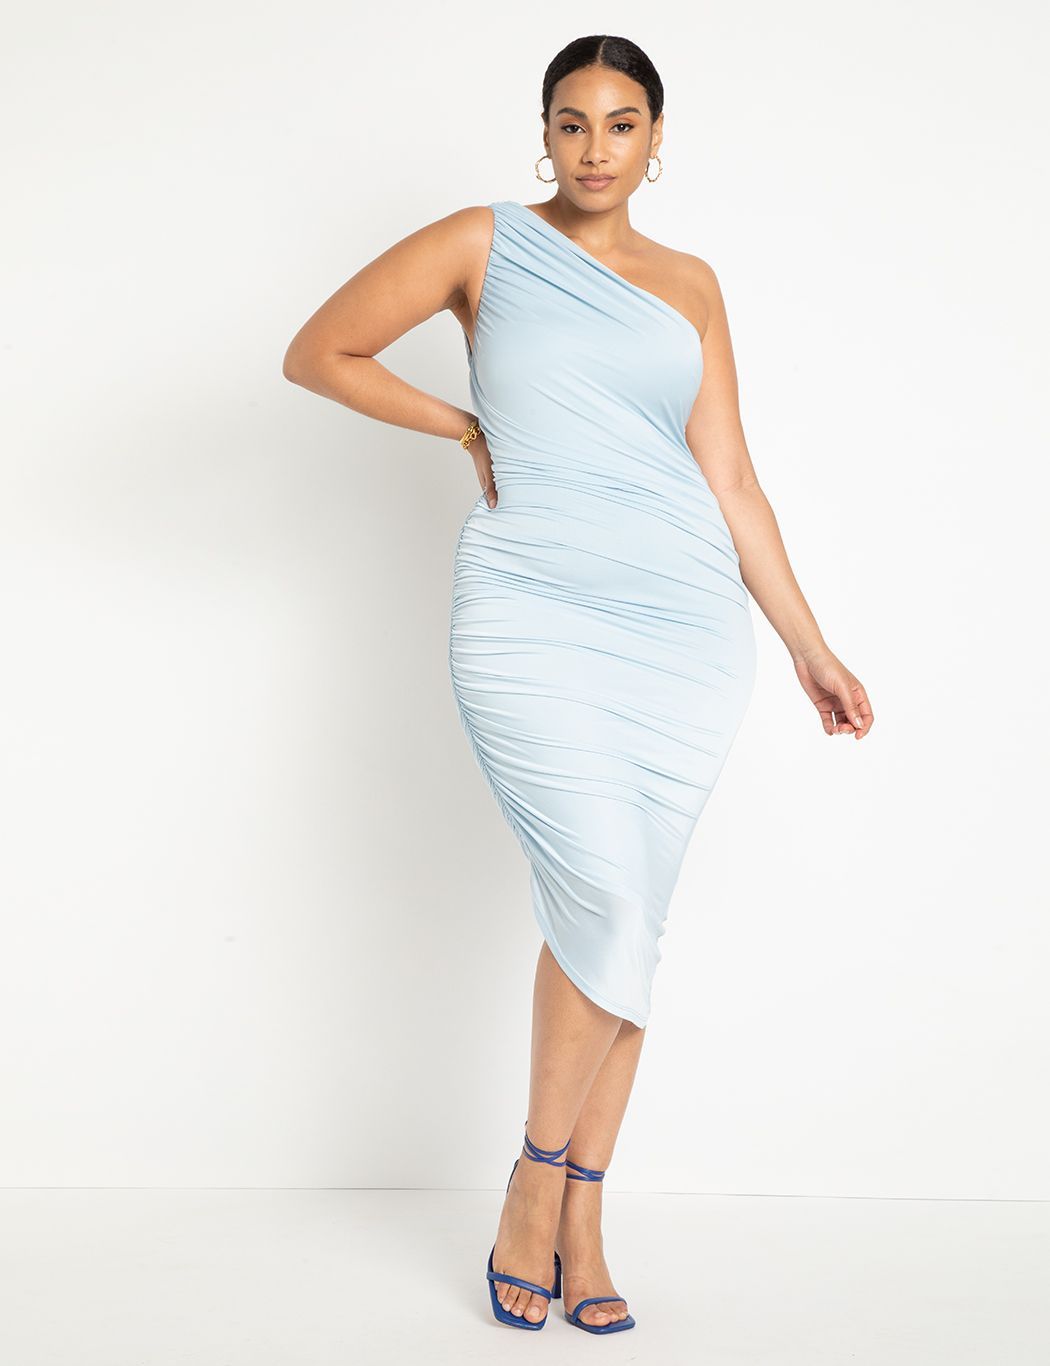 Ruched One Shoulder Dress | Women's Plus Size Dresses | ELOQUII | Eloquii